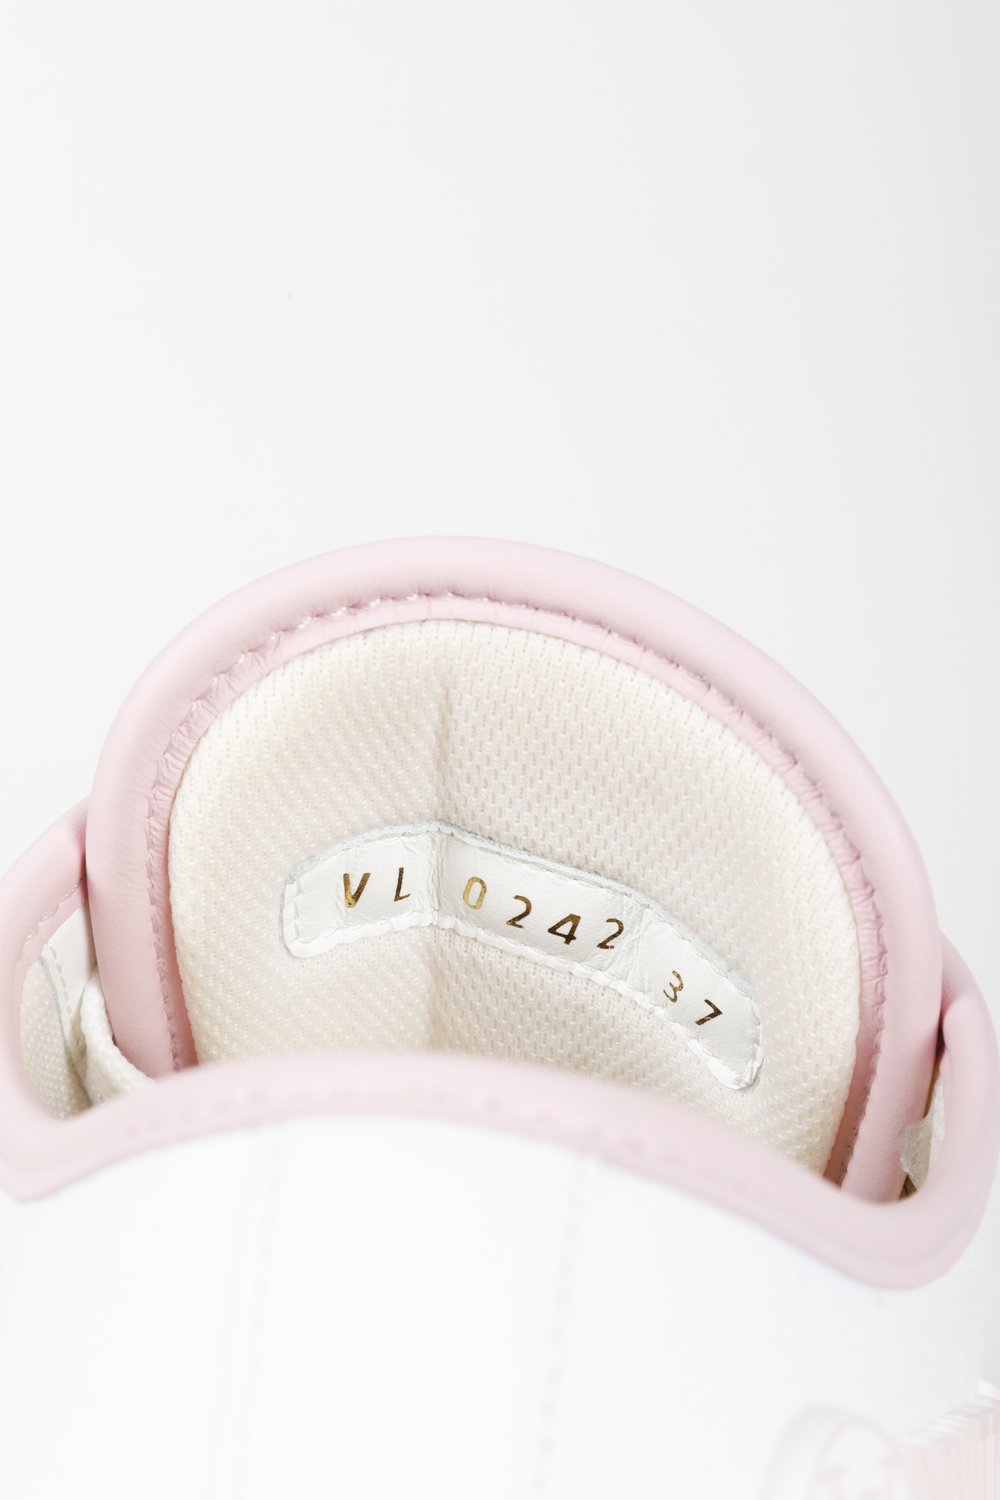 Louis Vuitton Canvas LV Squad Pink Sneakers — BLOGGER ARMOIRE